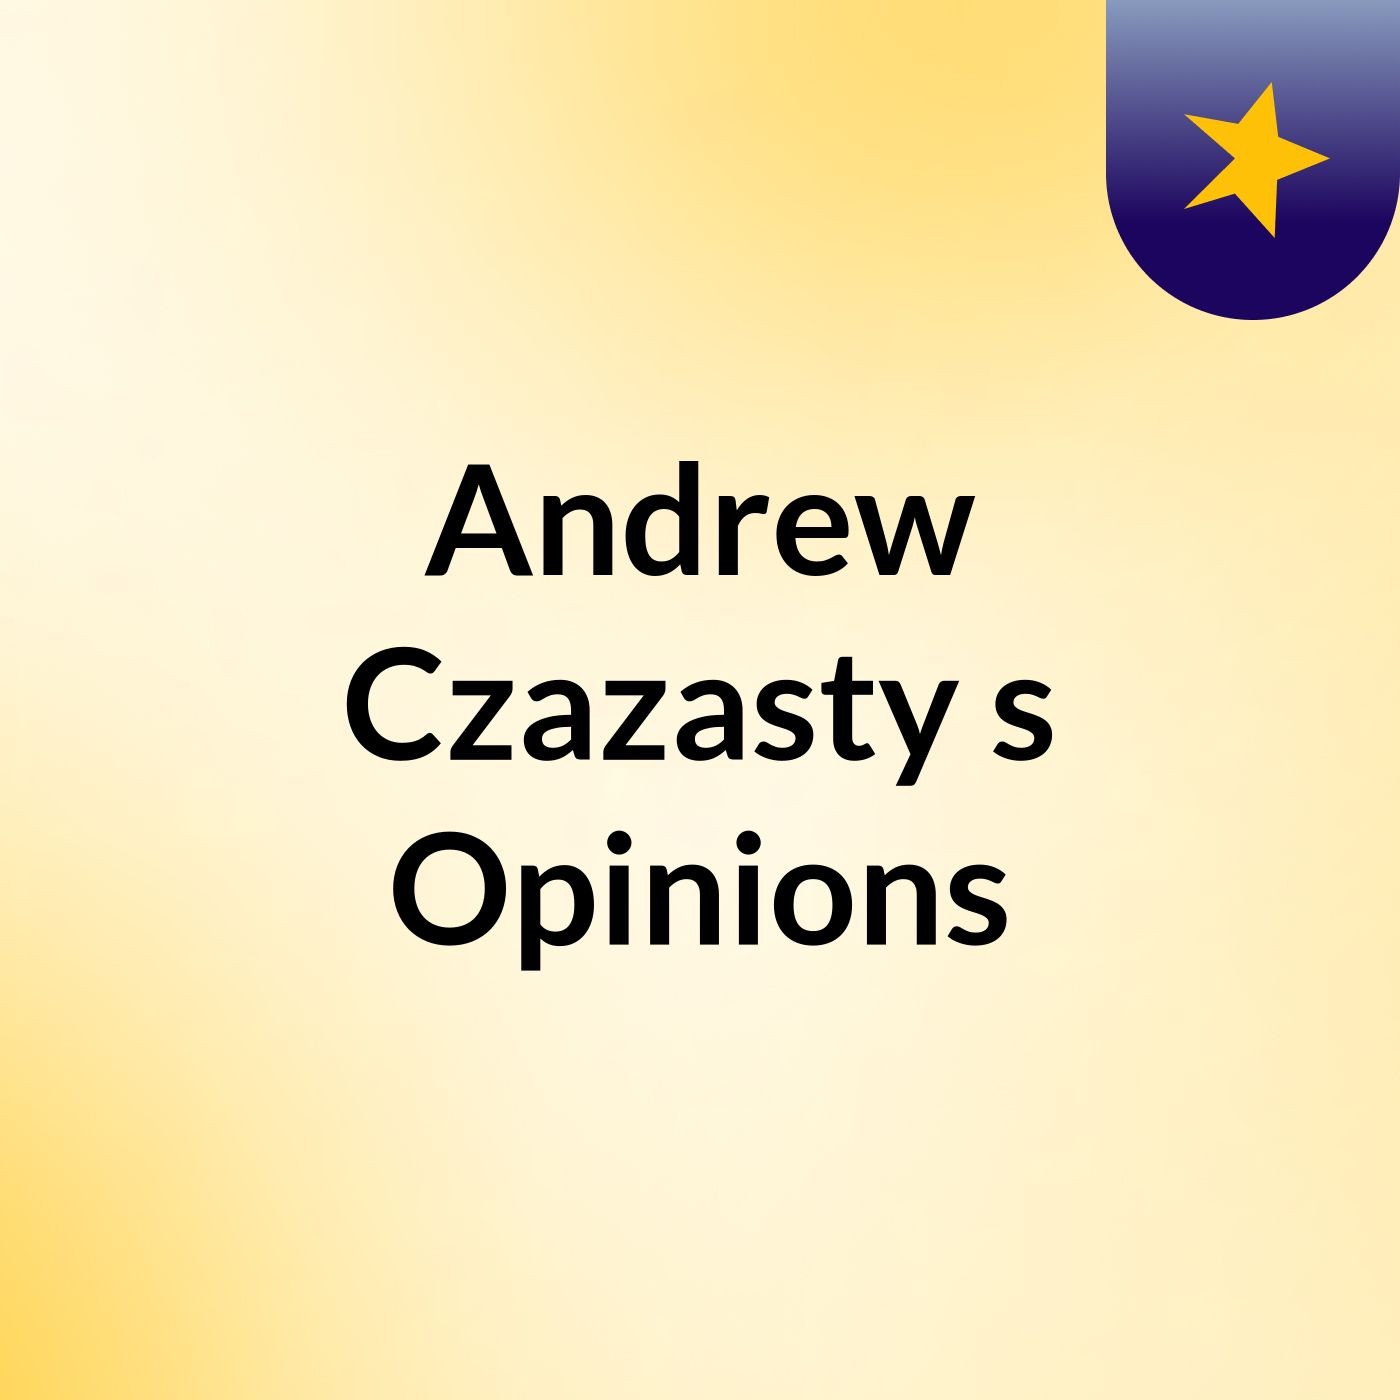 Andrew Czazasty's Opinions